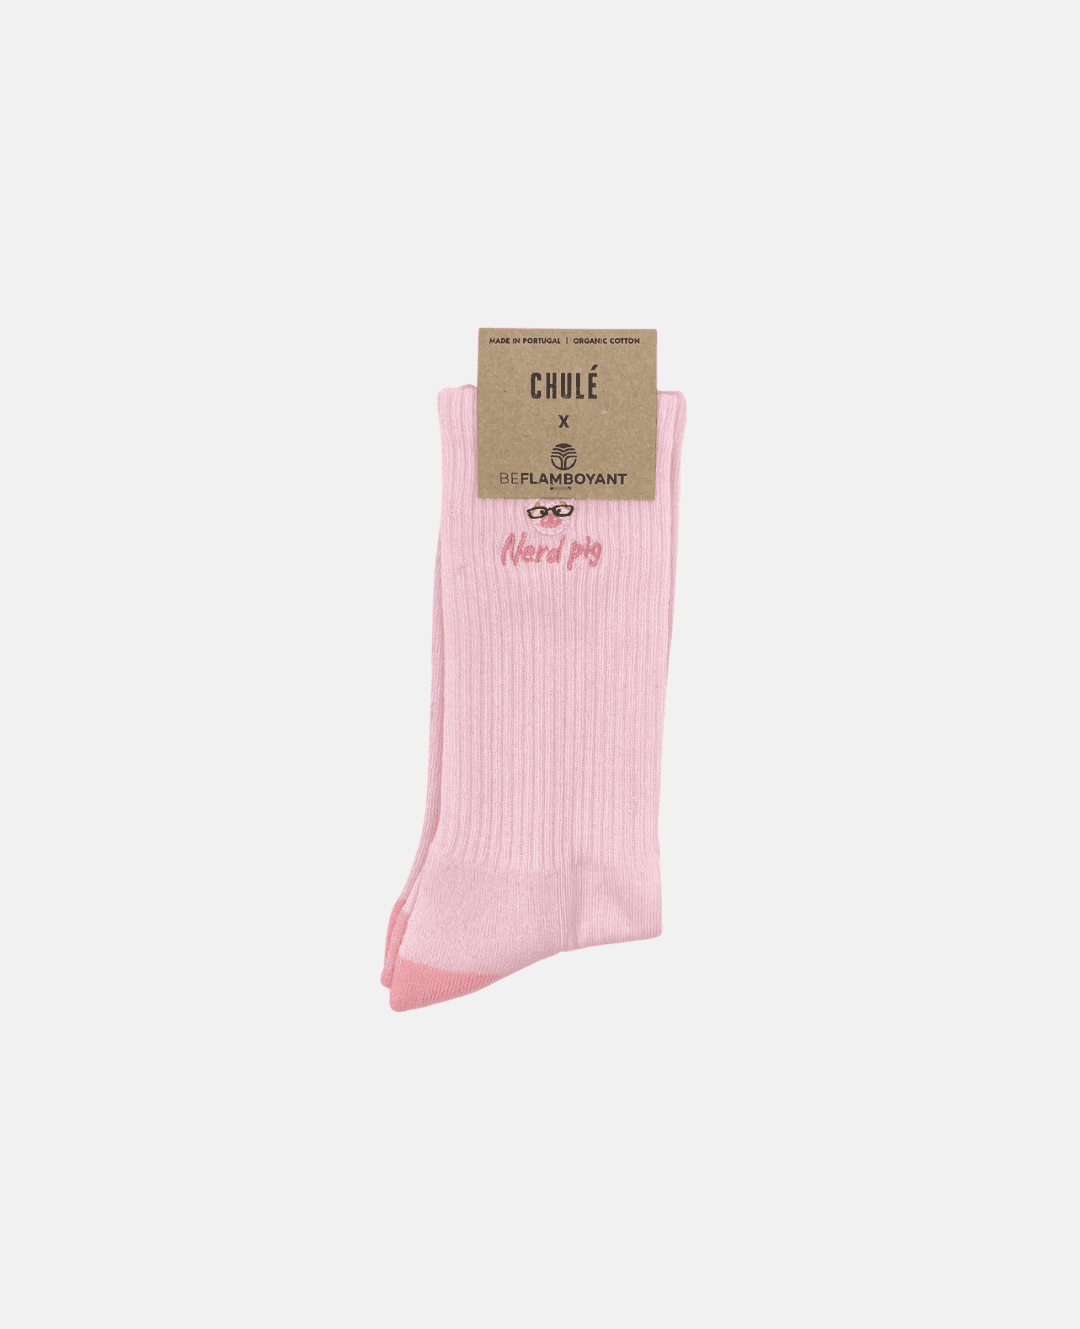 nerd-pig-organic-cotton-socks-close-view-label